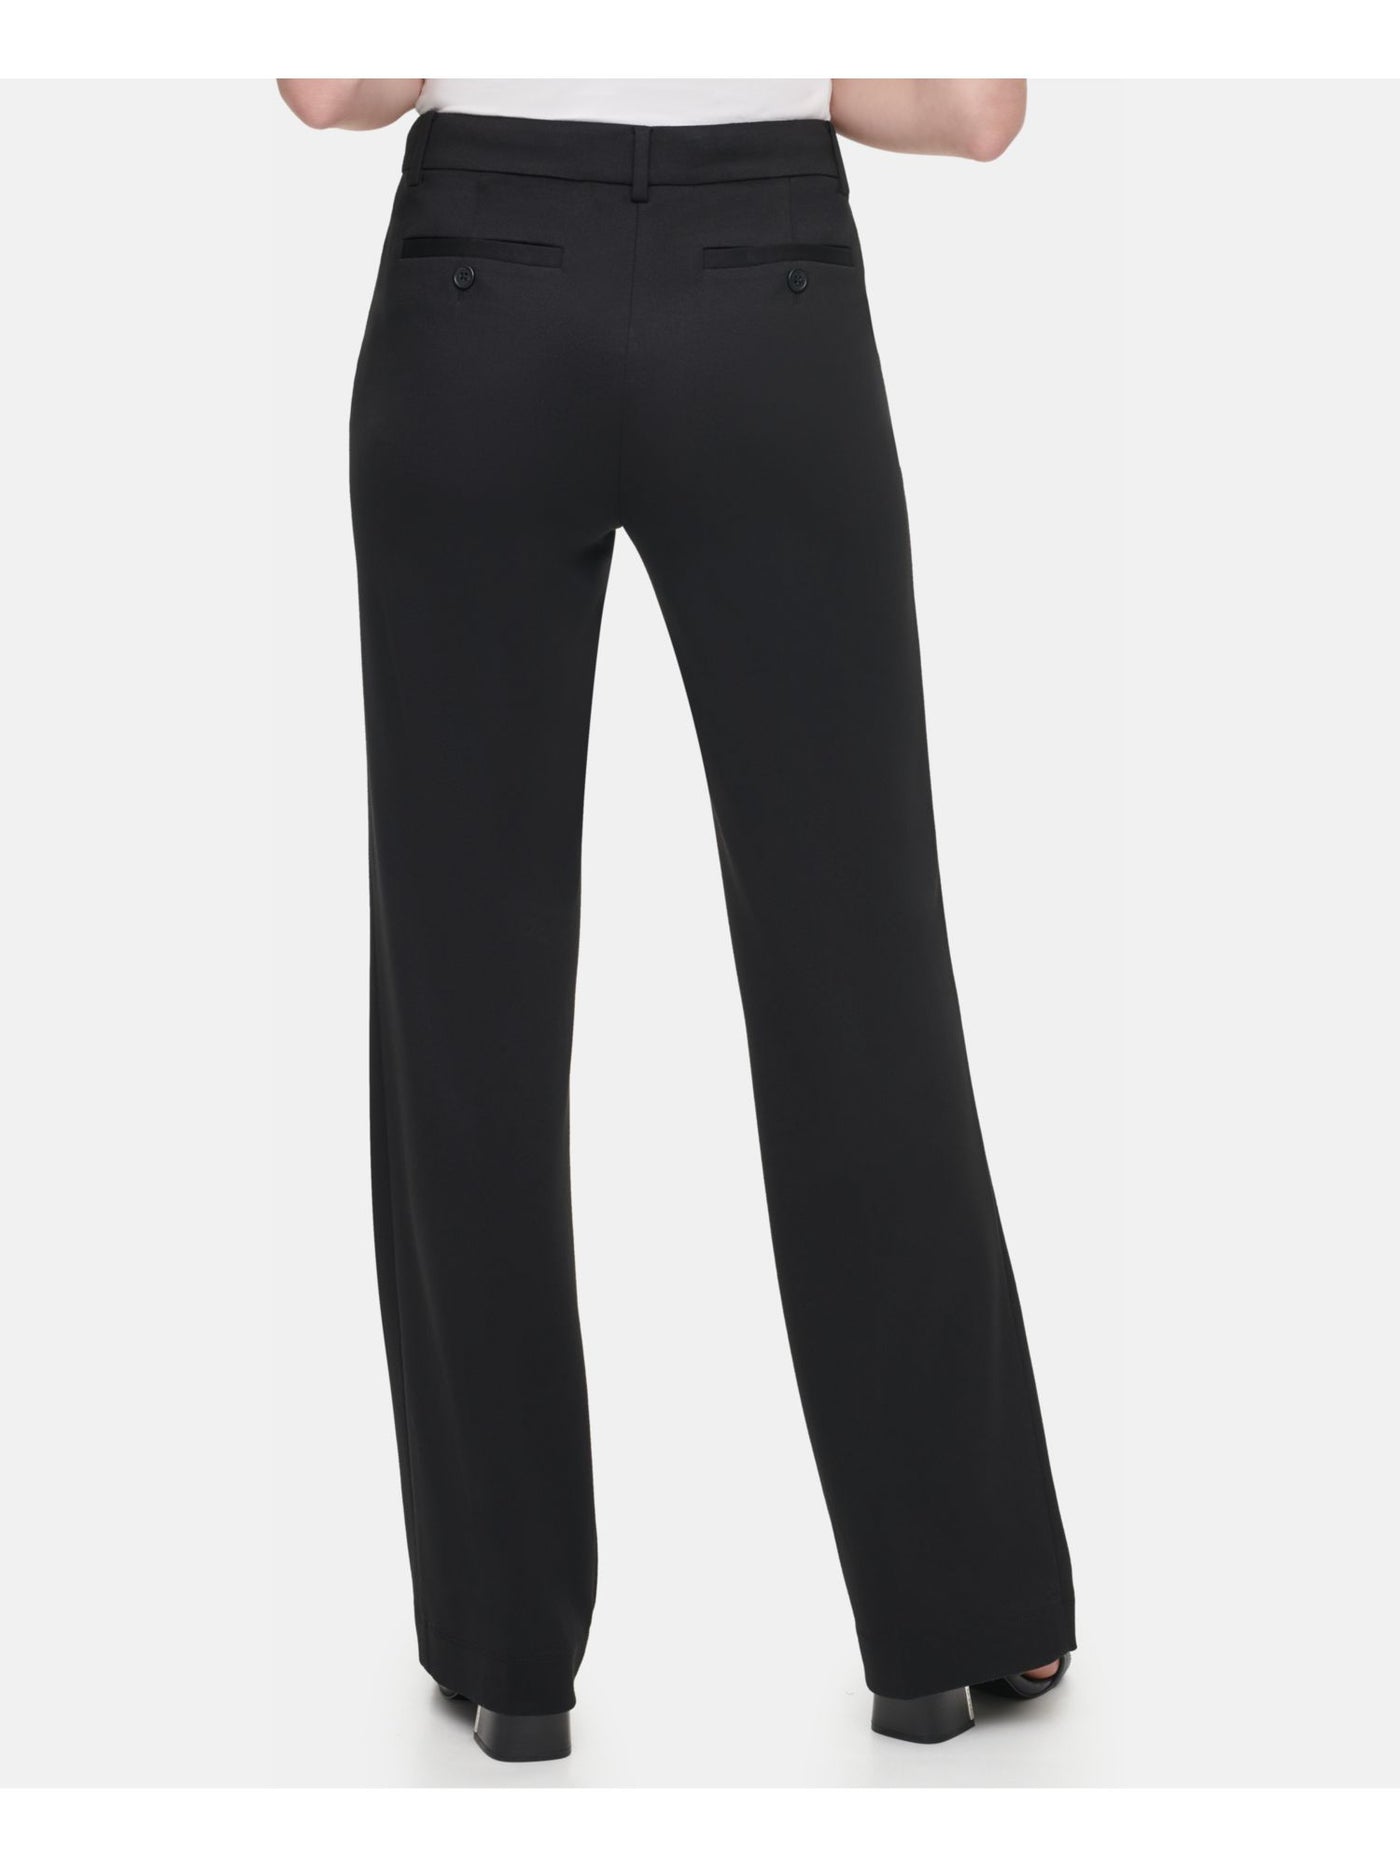 CALVIN KLEIN Womens Black Zippered Wear To Work Straight leg Pants 10